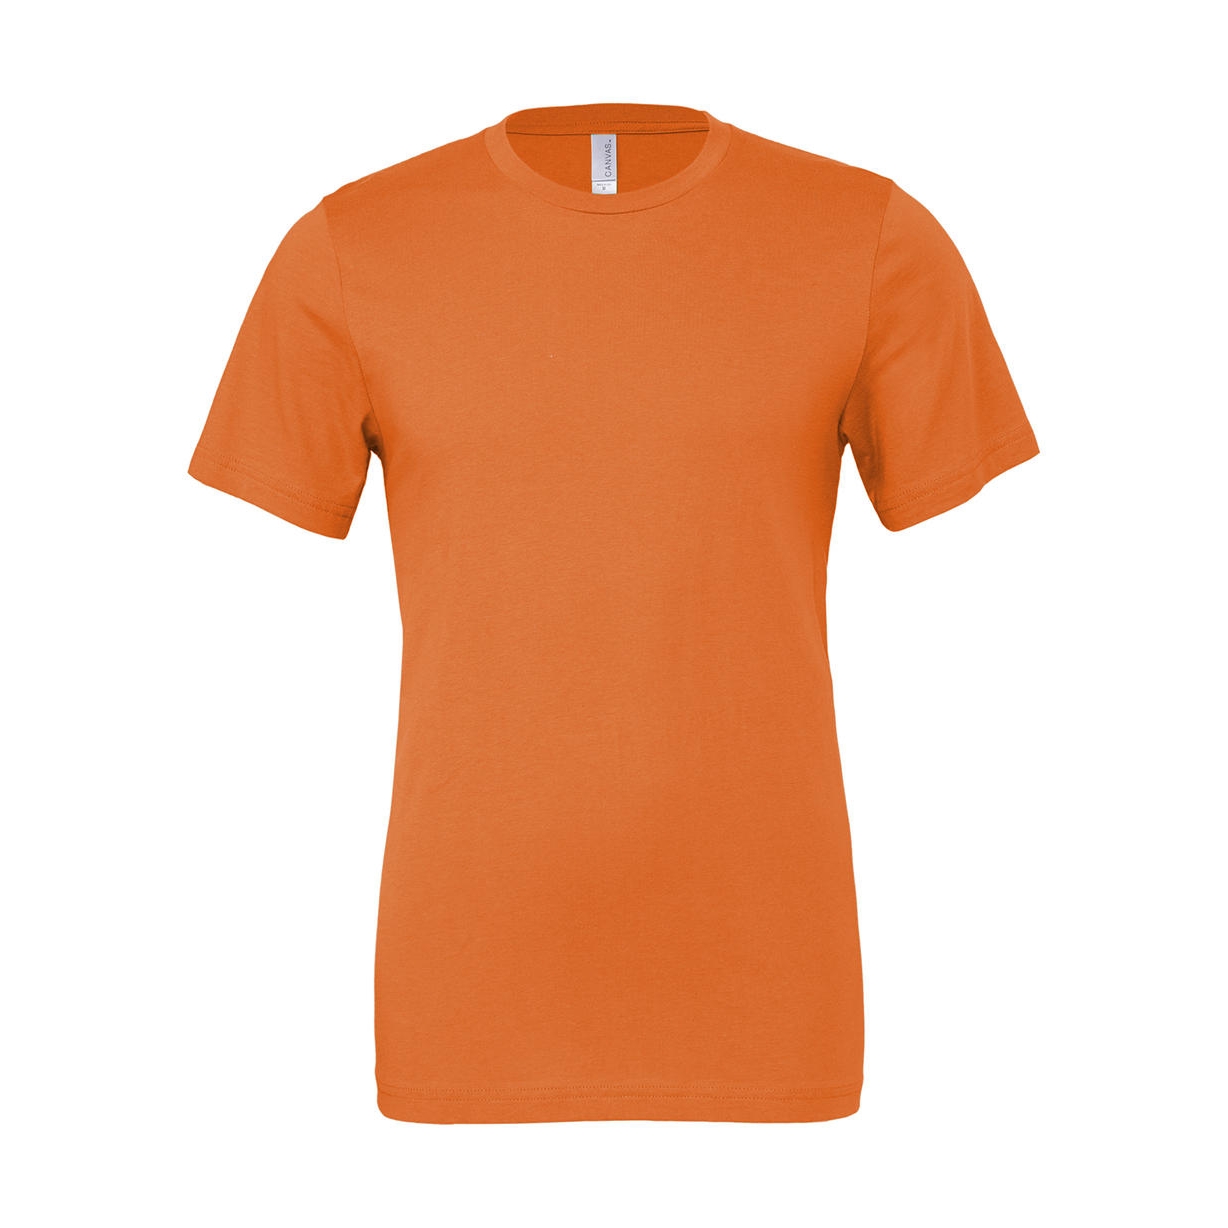 Tričko Bella Jersey - oranžové, XXL